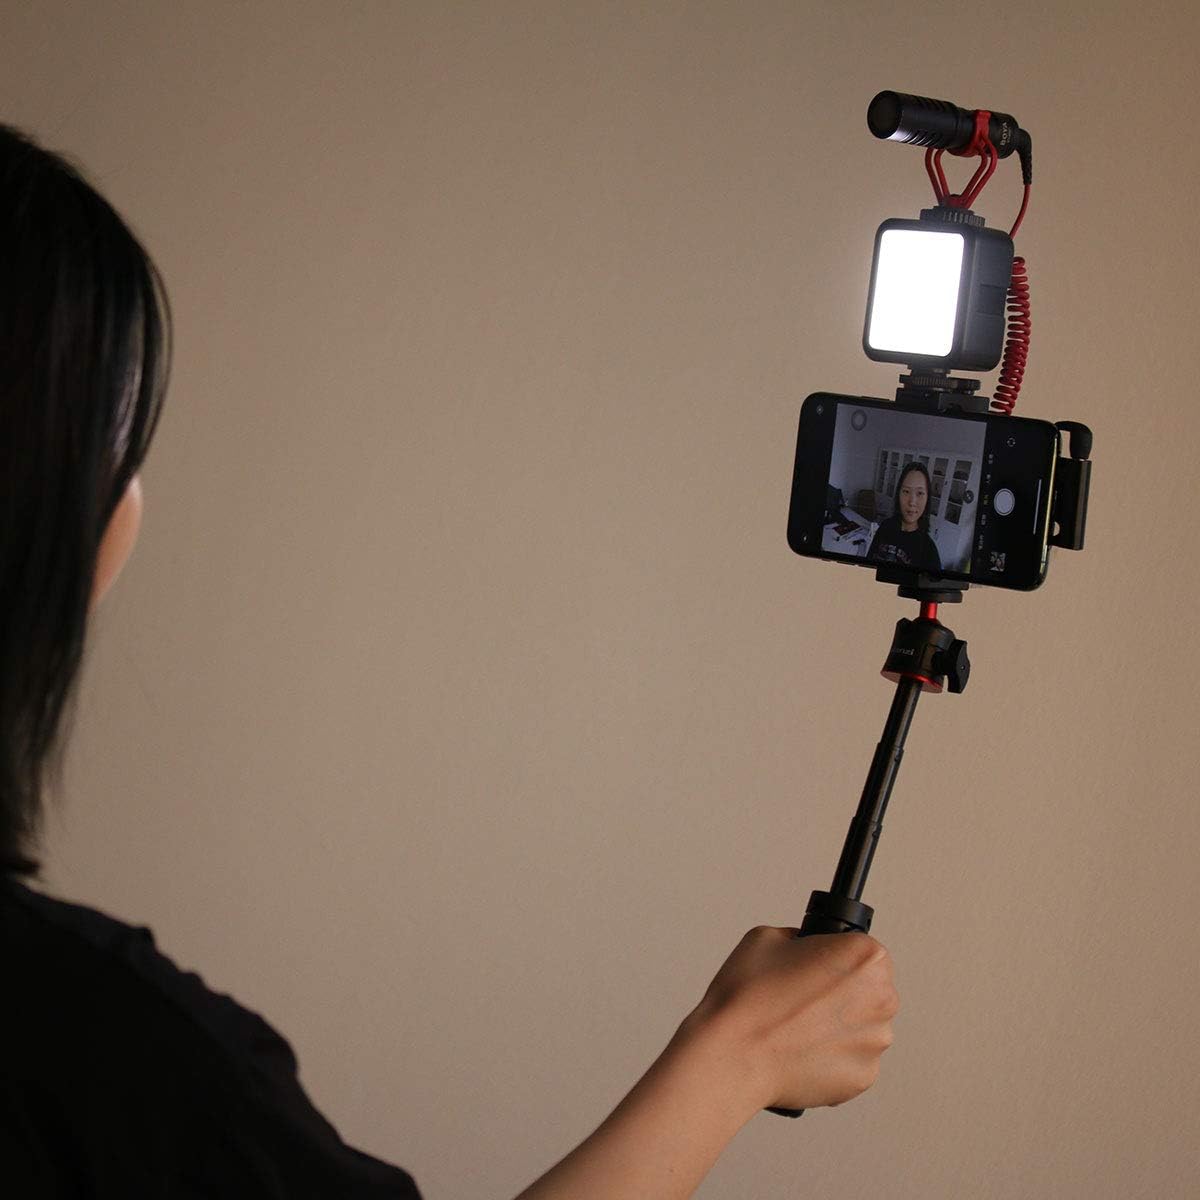 ULANZI MT-08 Extension Pole Tripod, Mini Selfie Stick Tripod Stand Handle Grip for iPhone 11 Pro Max Samsung OnePlus Google Smartphone Canon G7X Mark III Sony RX100 VII A6400 A6600 Cameras Vlogging…